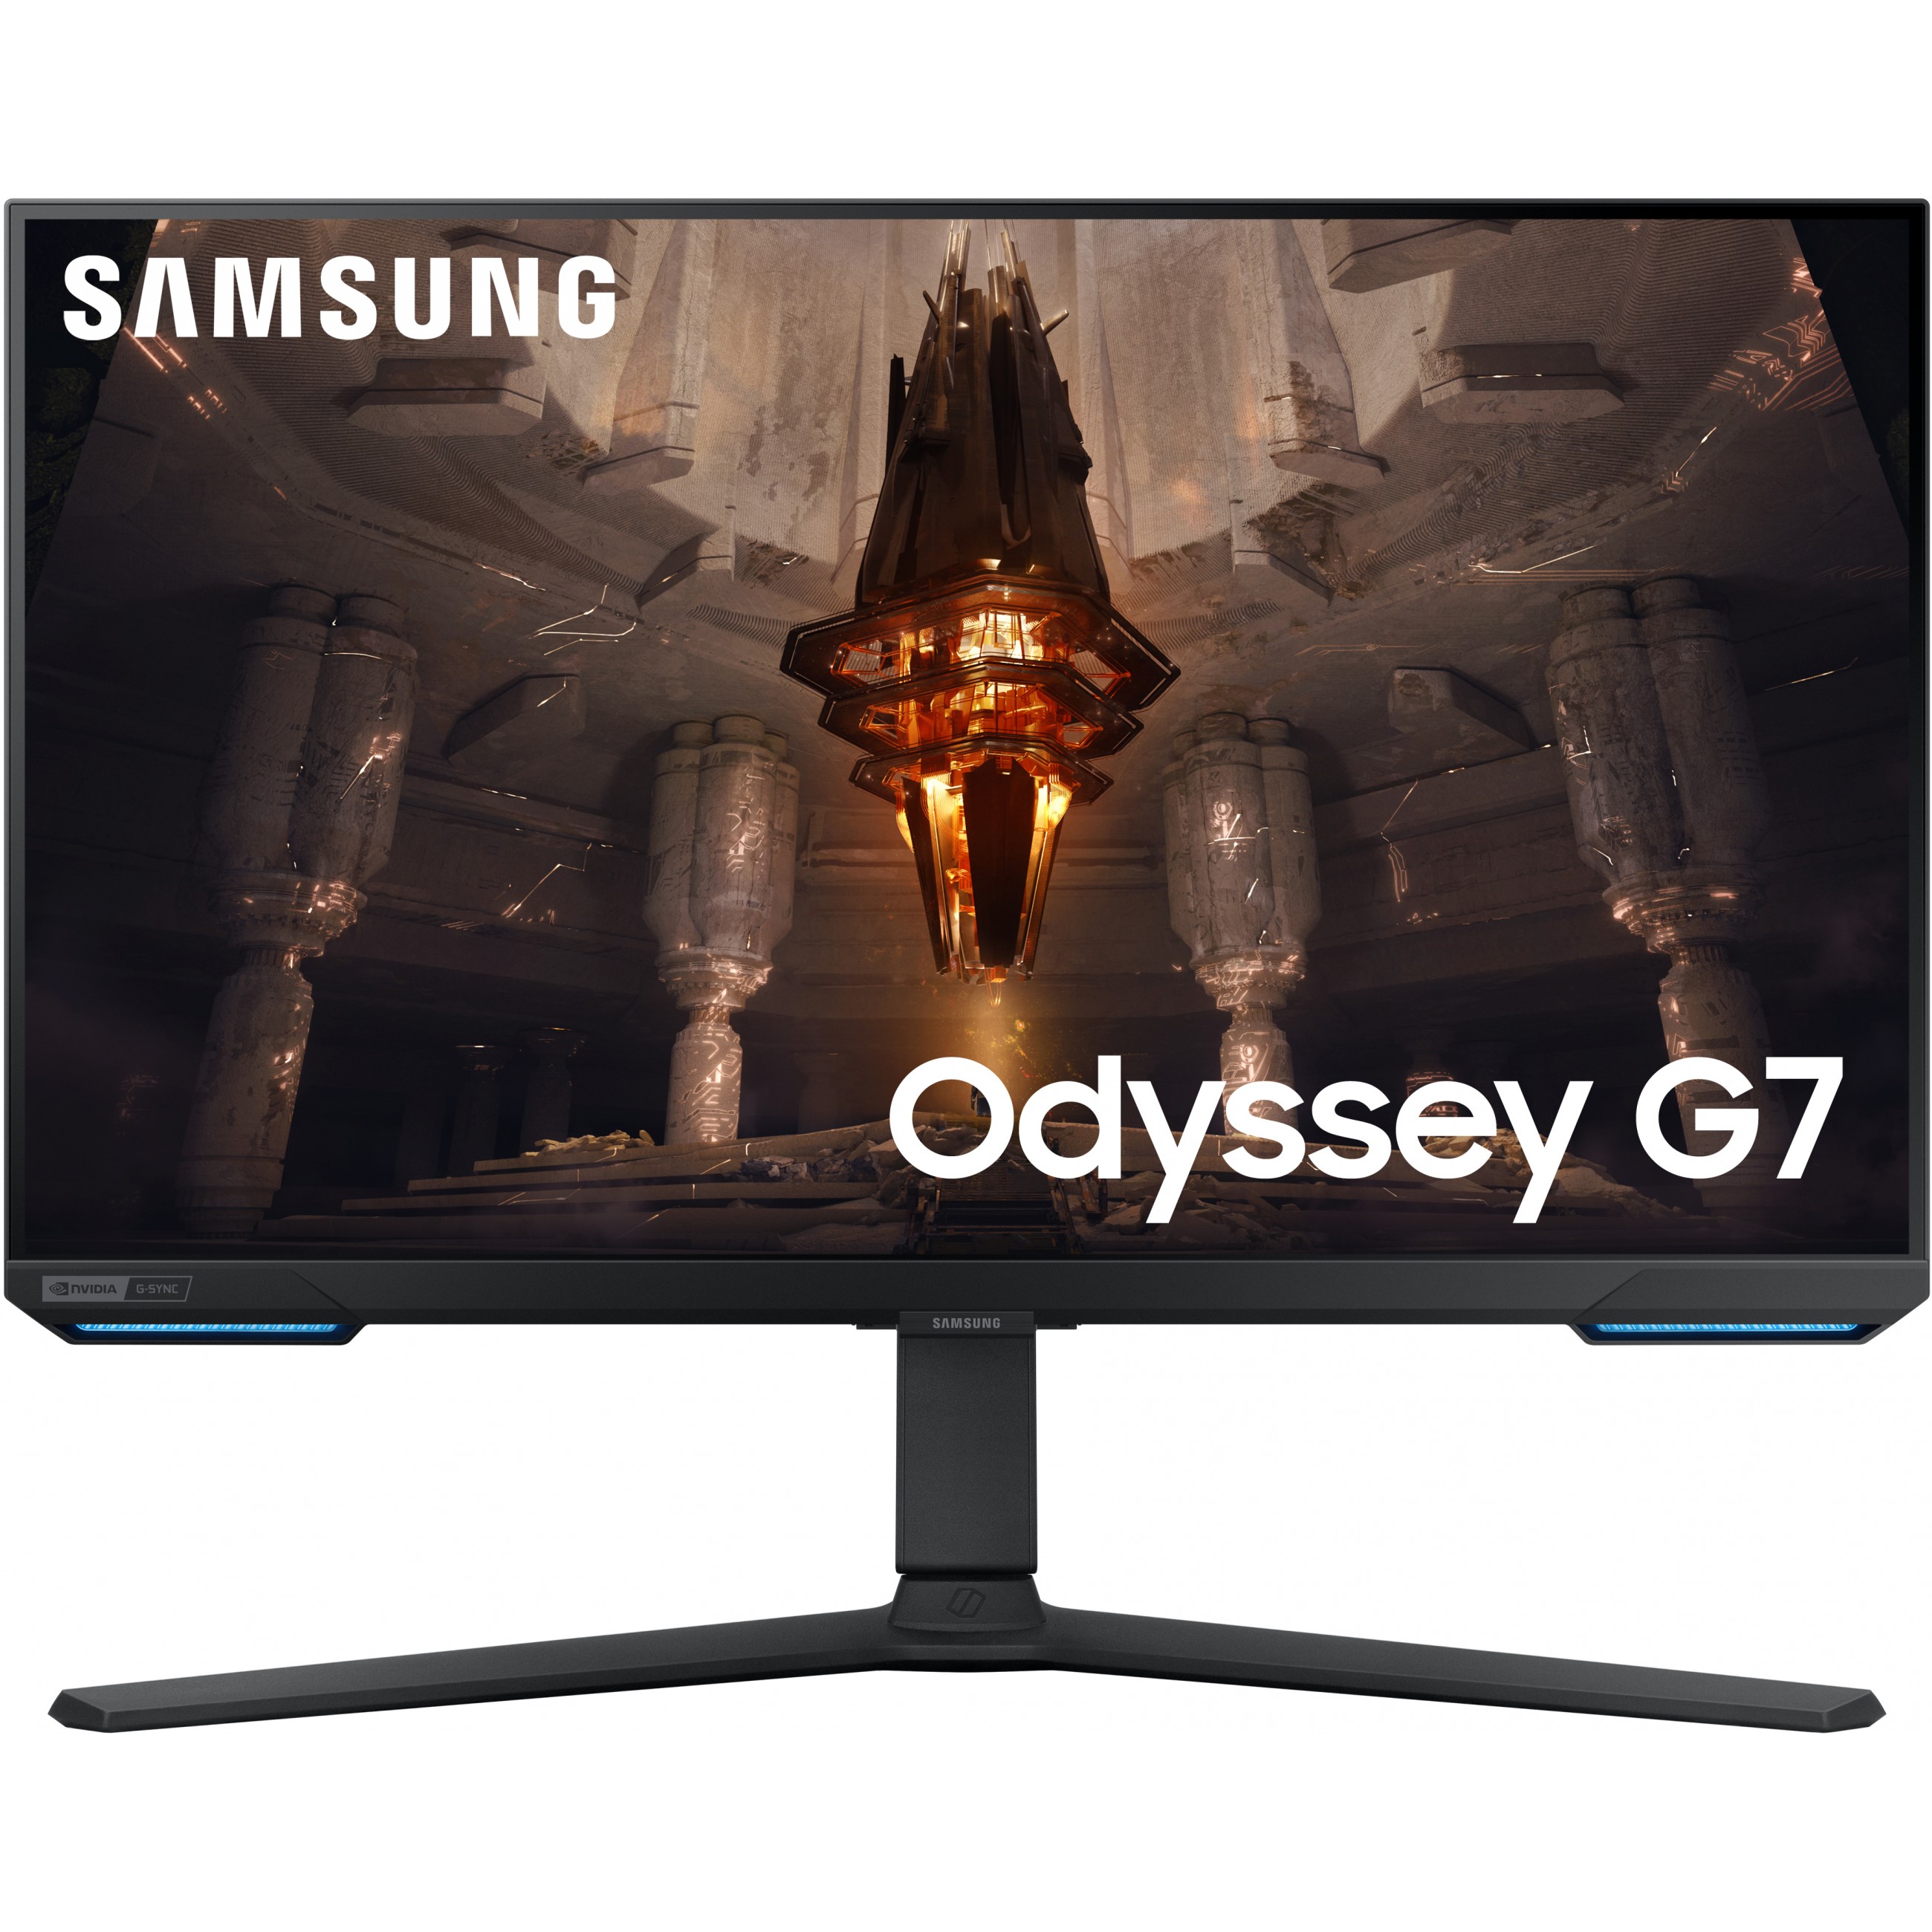 Samsung Odyssey G7 G70B computer monitor